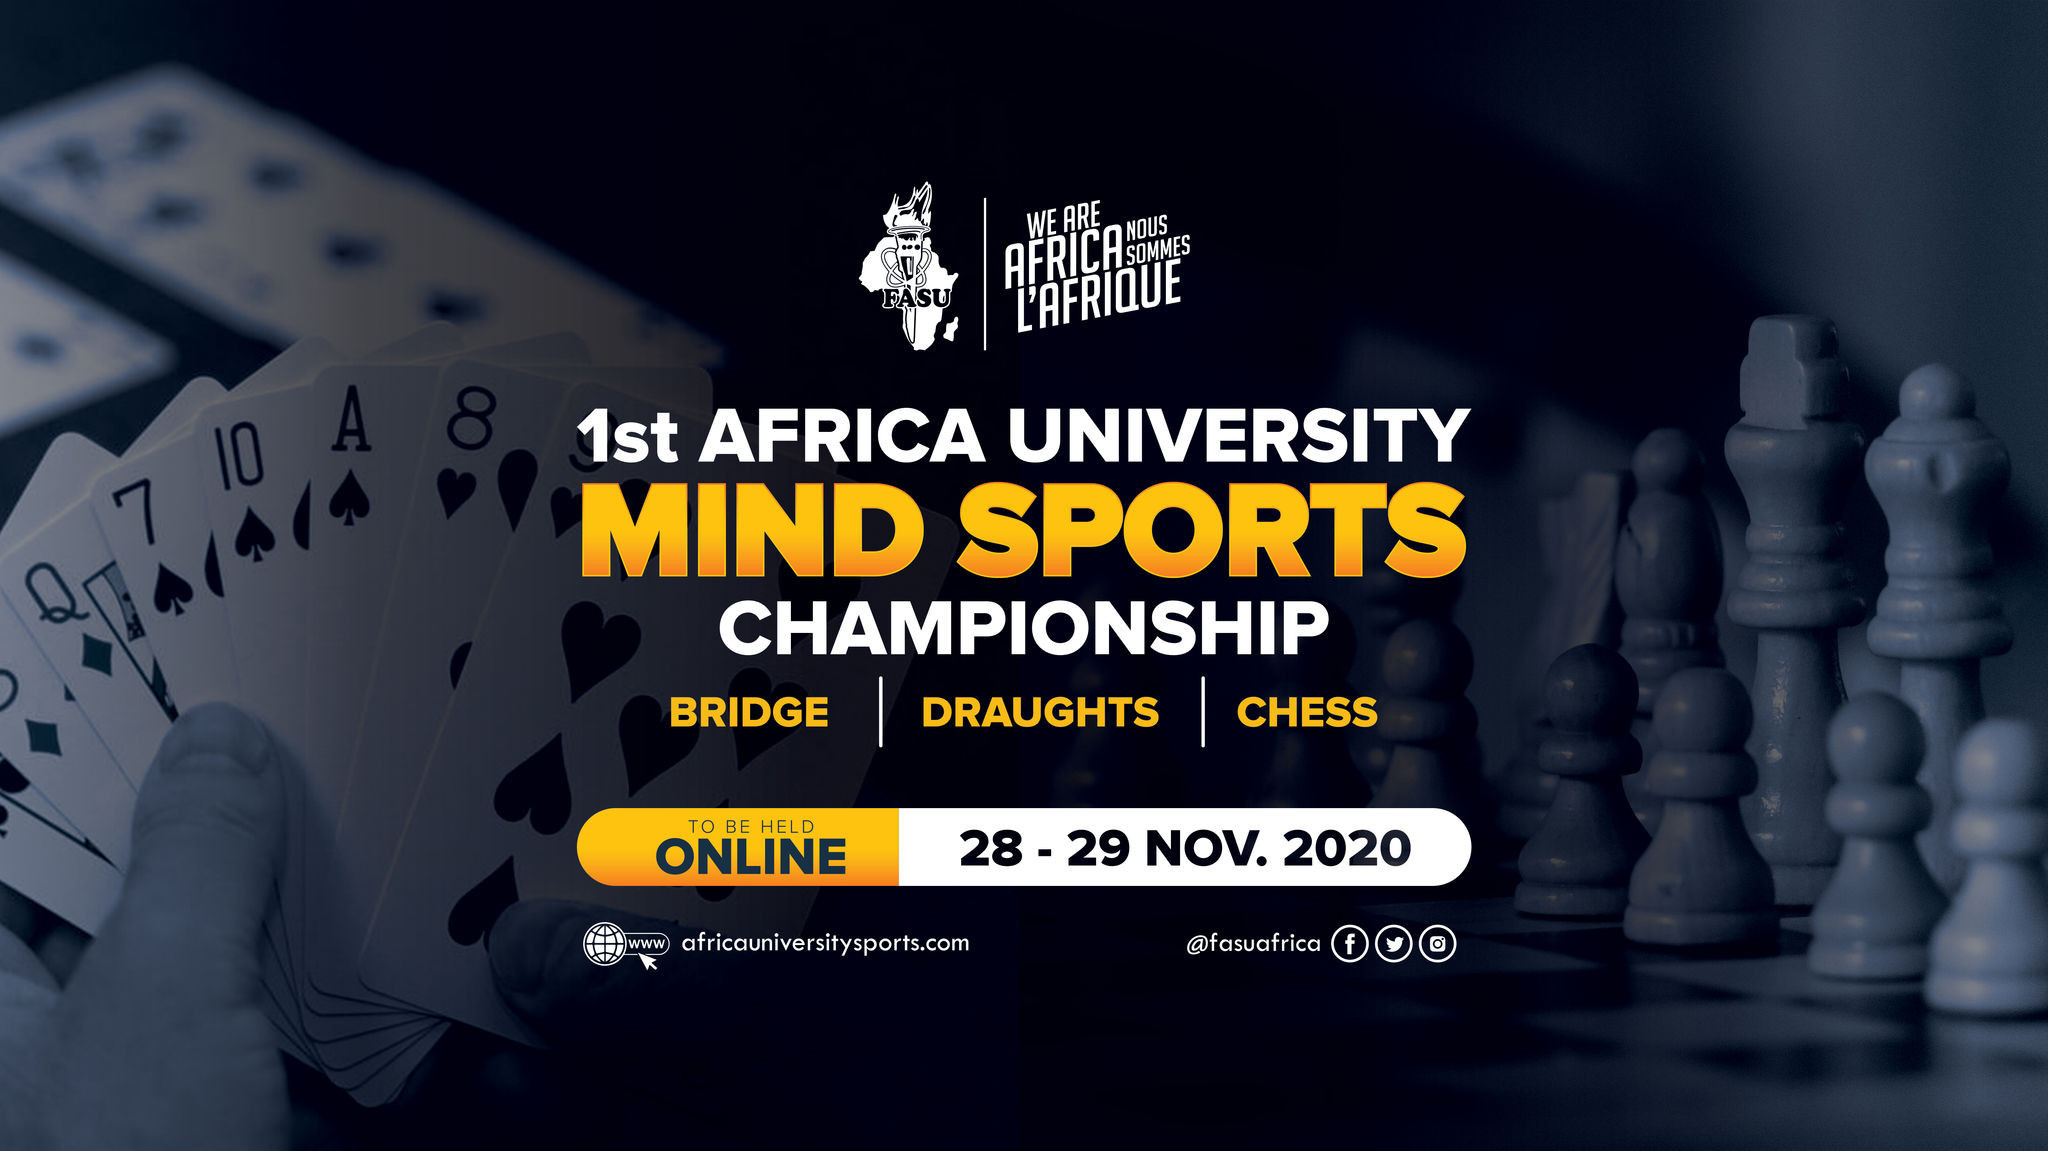 Busitema University impress at first Africa University Mind Sports Championships